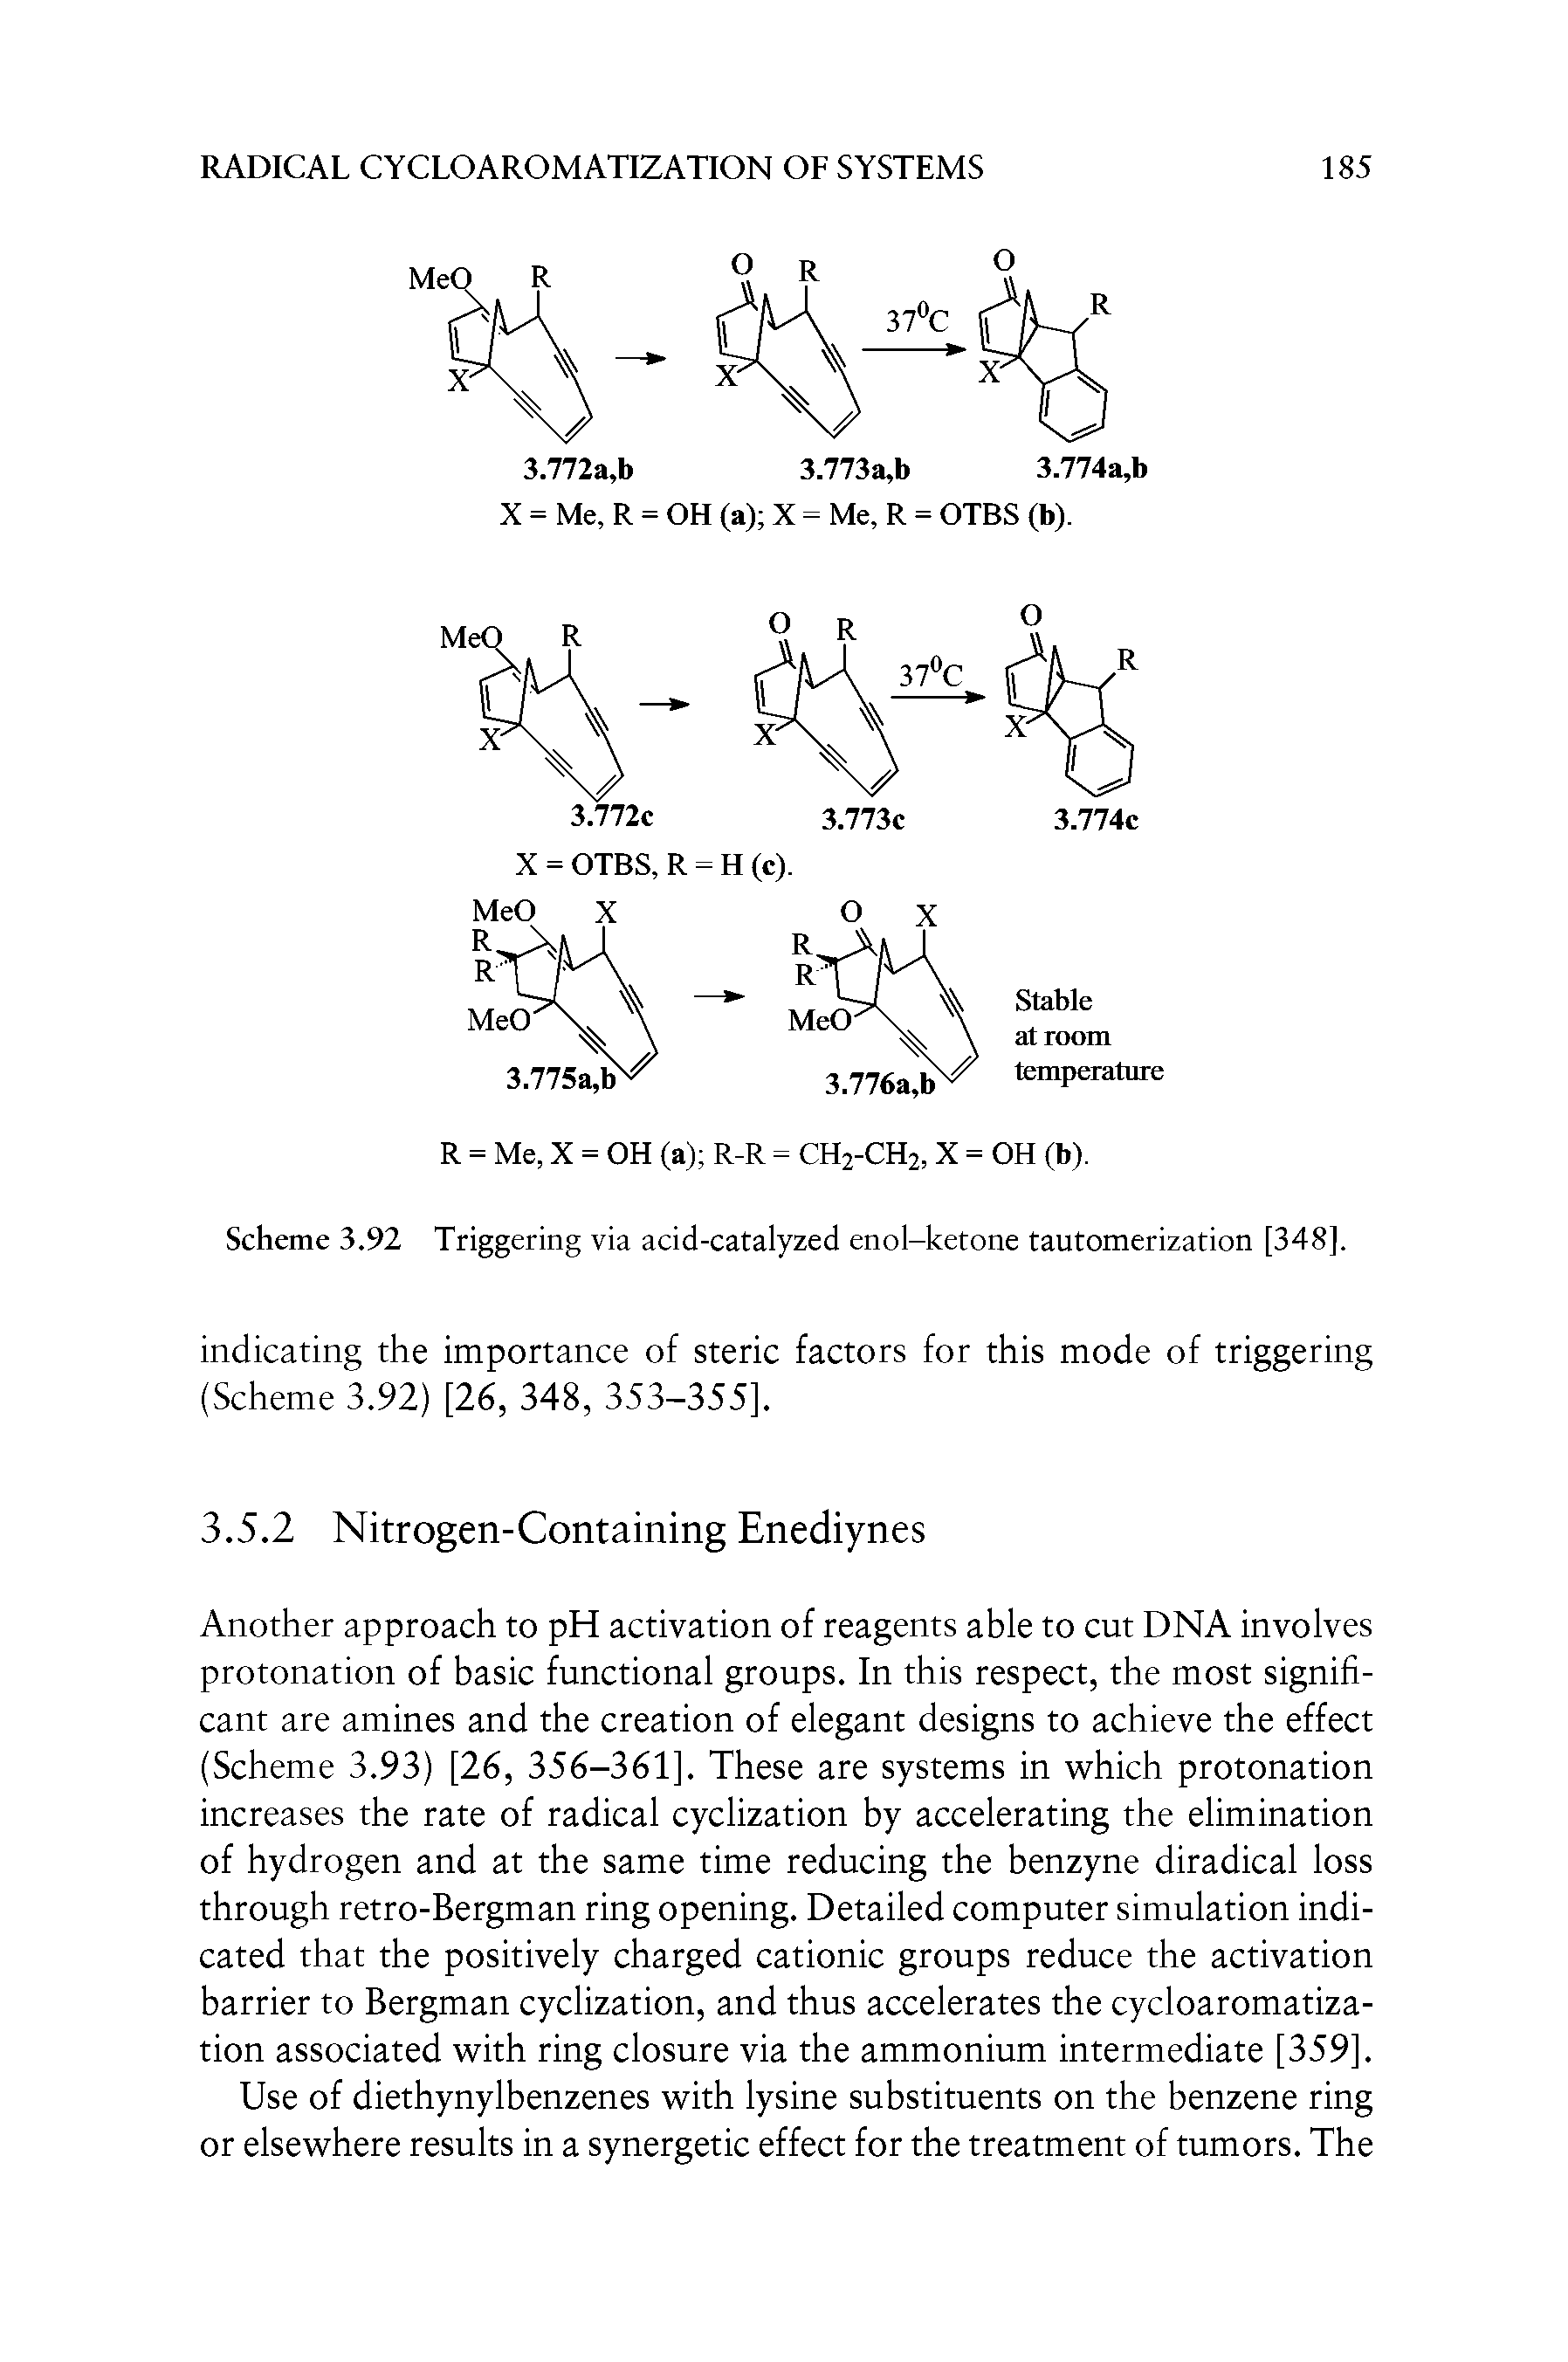 Scheme 3.92 Triggering via acid-catalyzed enol-ketone tautomerization [348],...